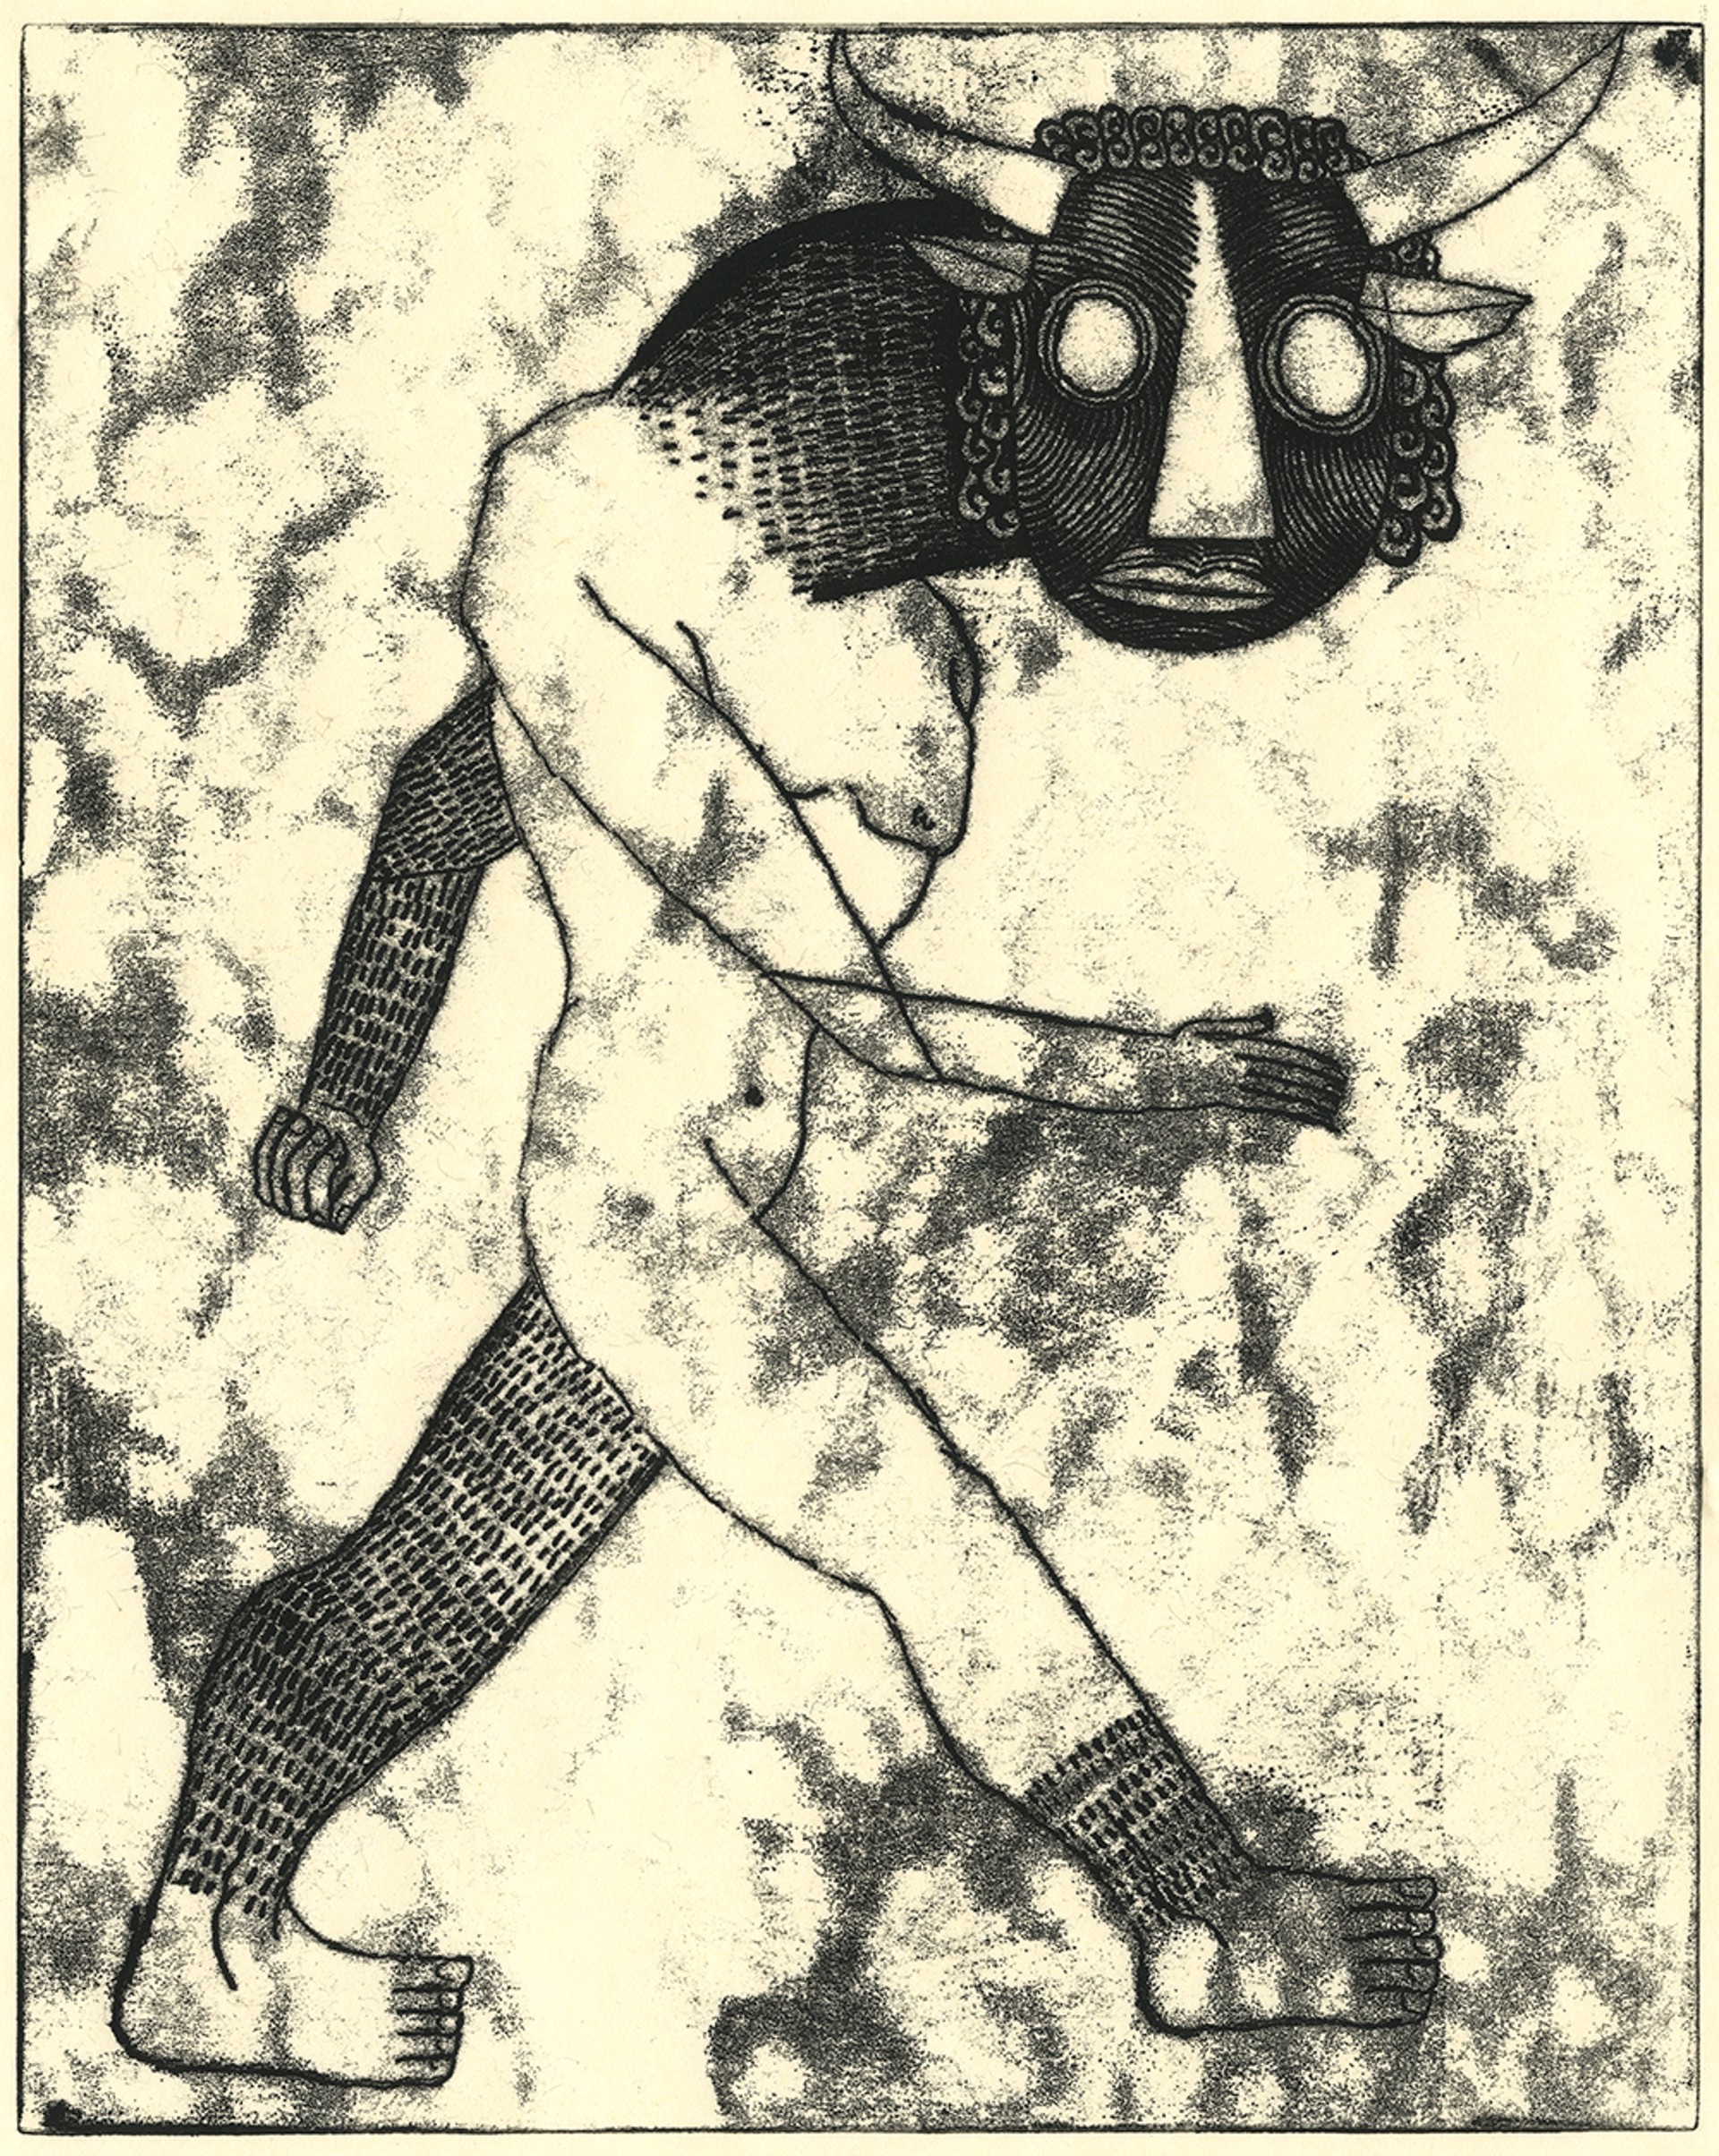 Minotaur No. 402 by Richard Downs